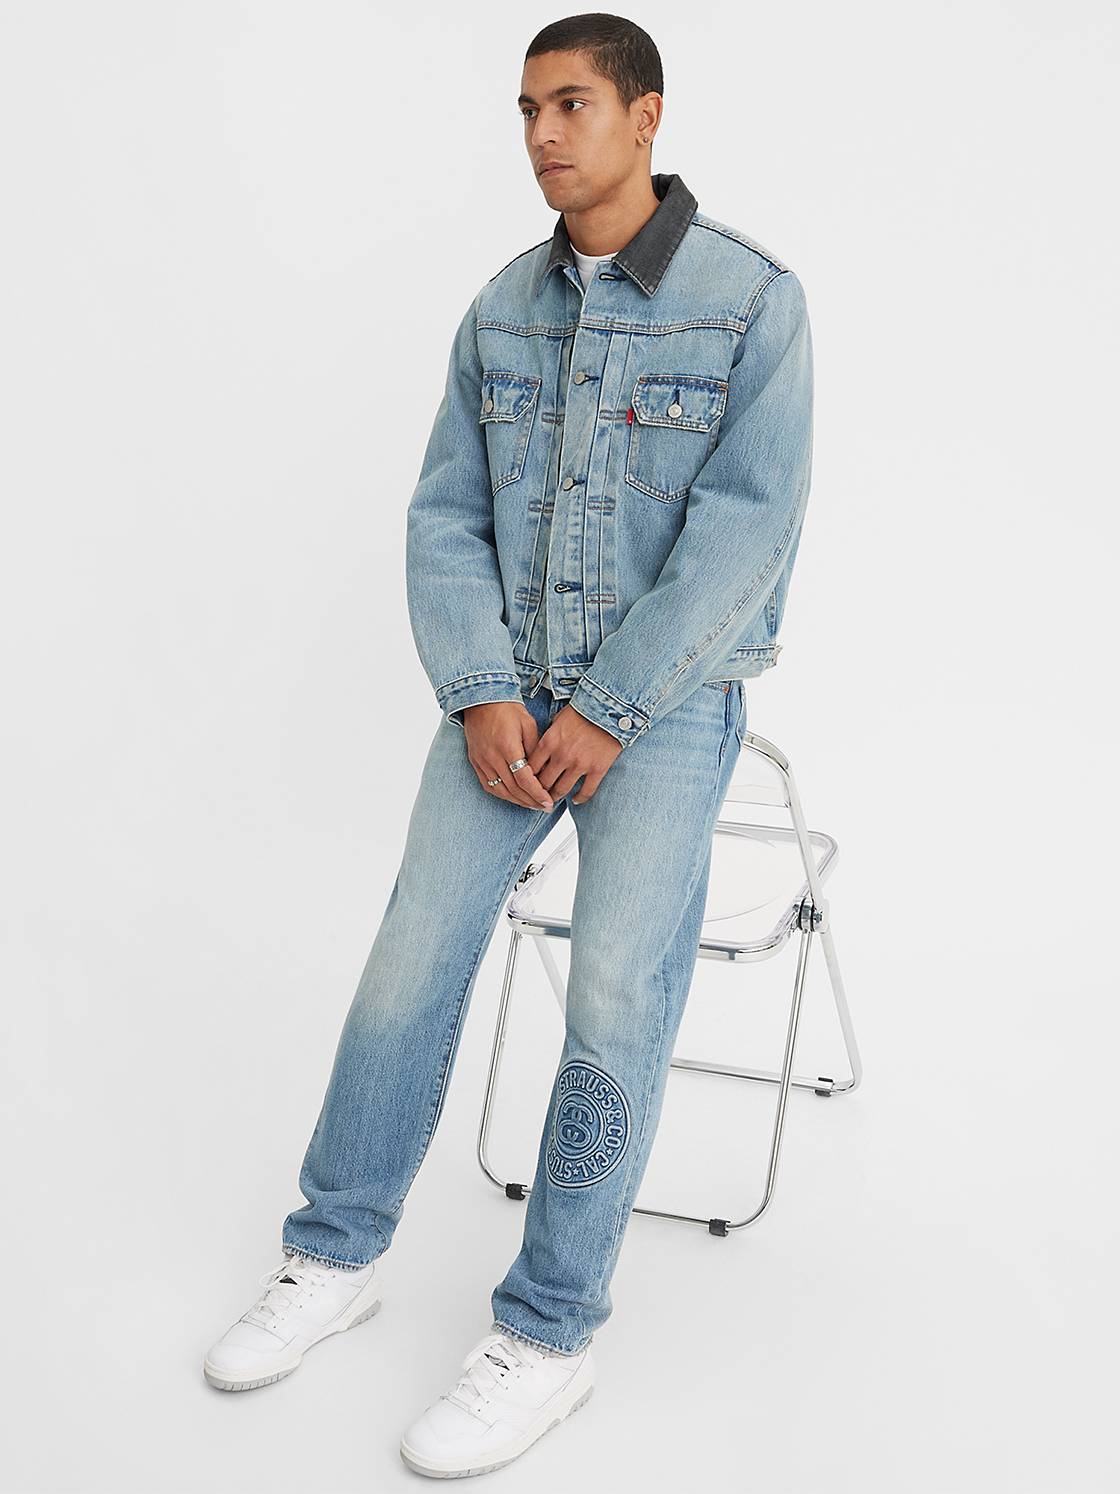 Levi's® x Stussy Jackets & Jeans Collection for Men | Levi's® US